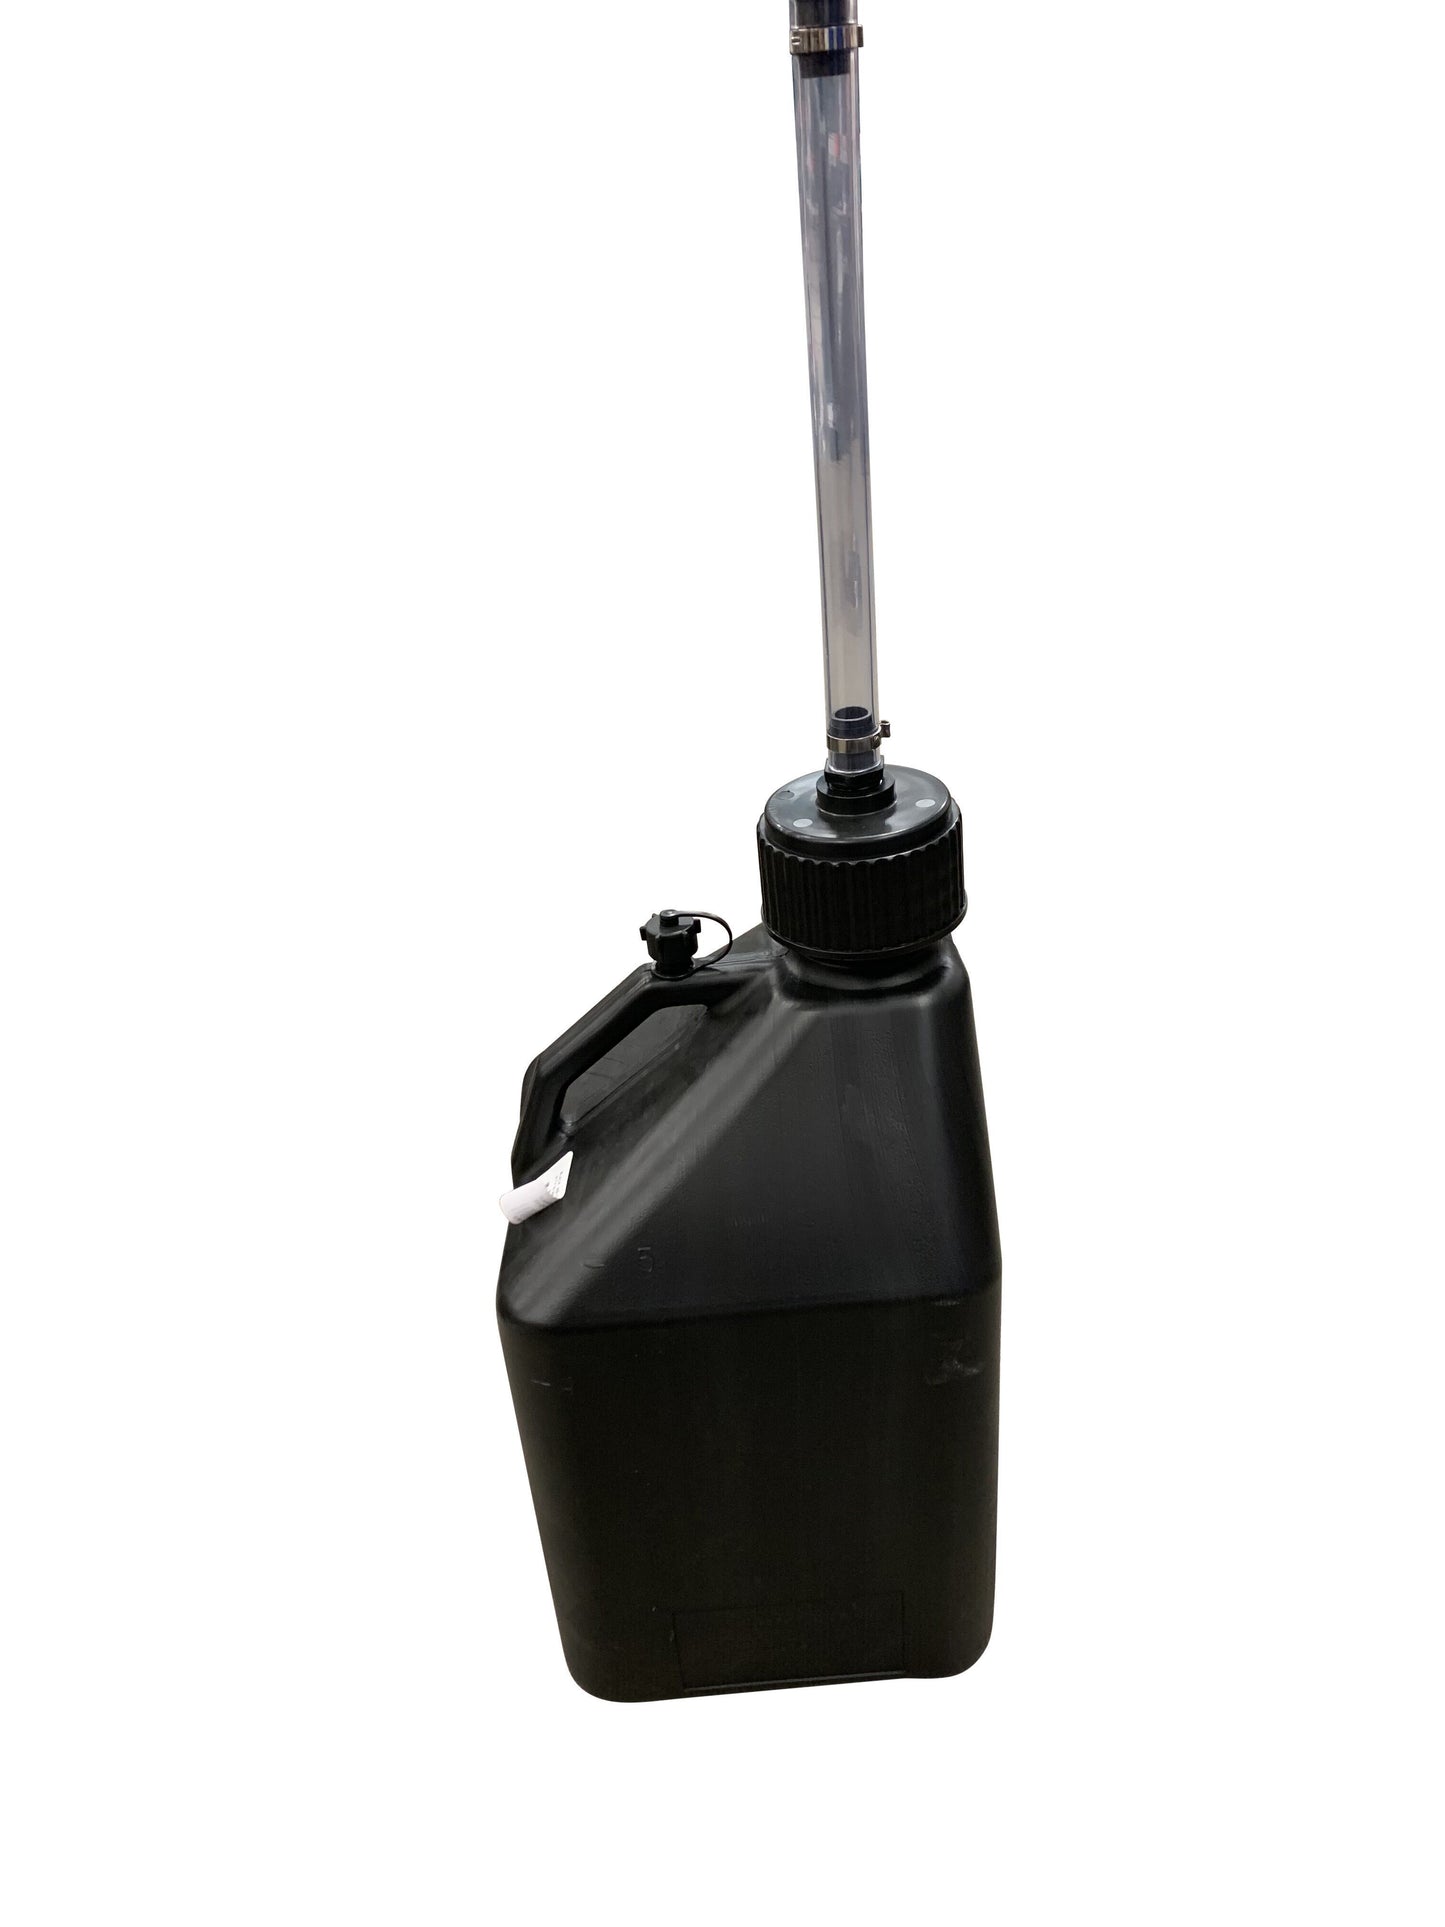 Black Utility Jug 5 Gallon-gardening tools-Tool Mart Inc.